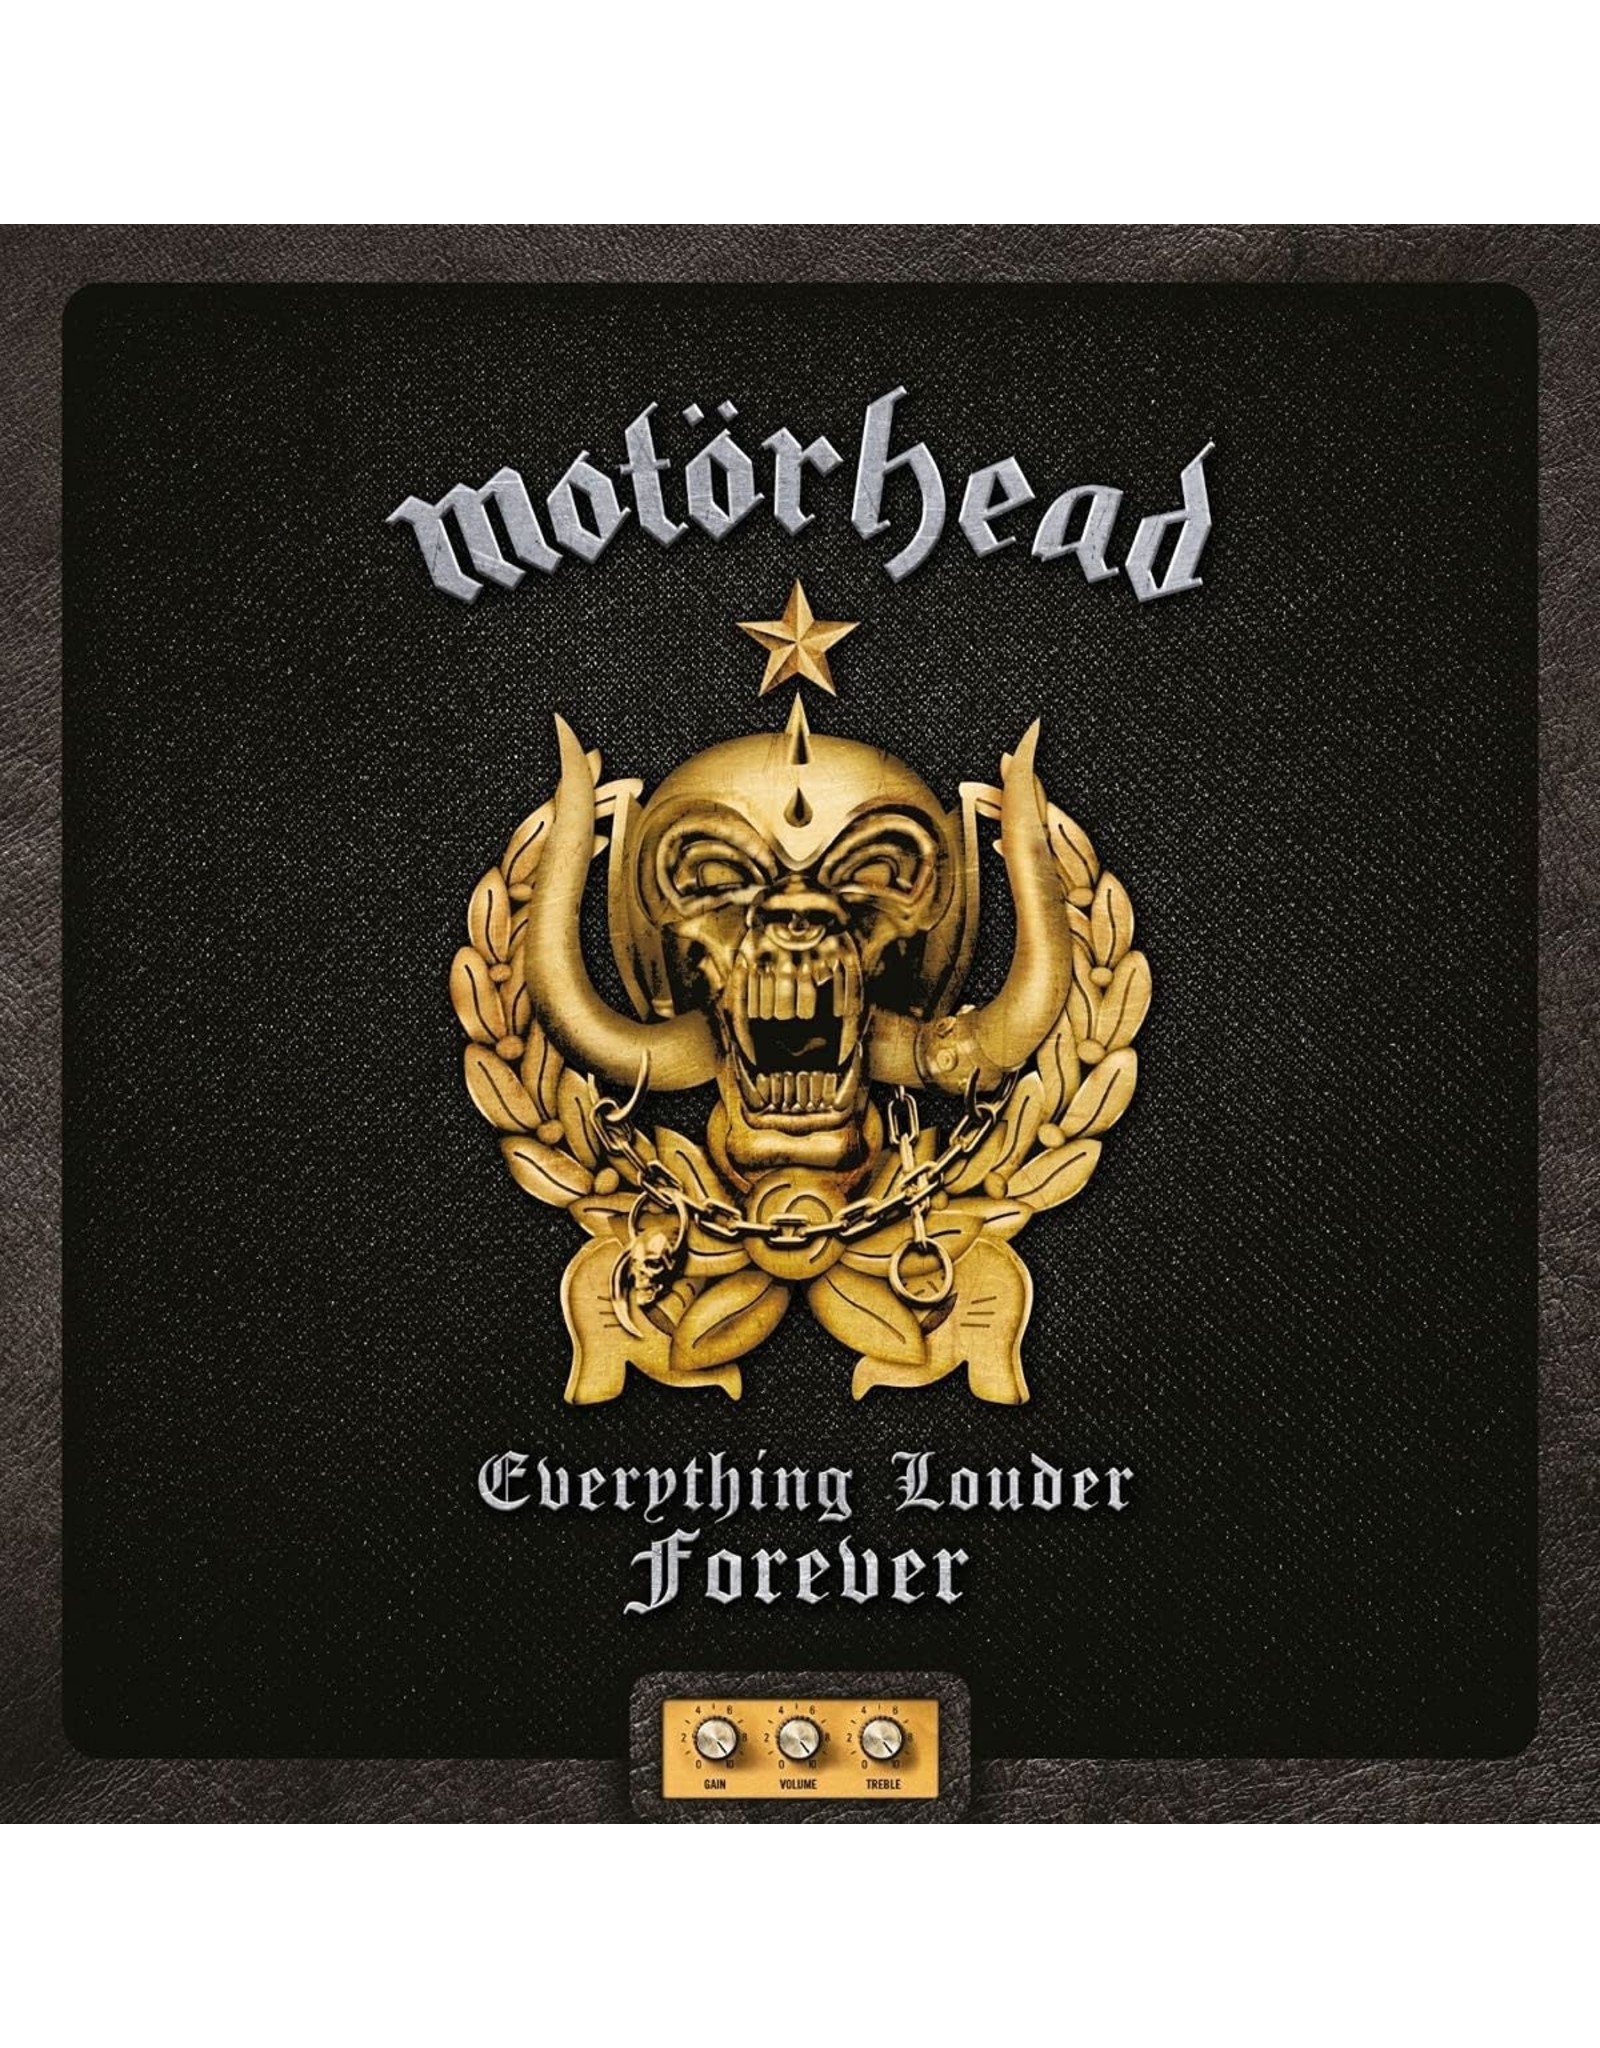 MotorHead MOTORHEAD everything louder forever 2021 METAL PIN BADGE official merch LEMMY 